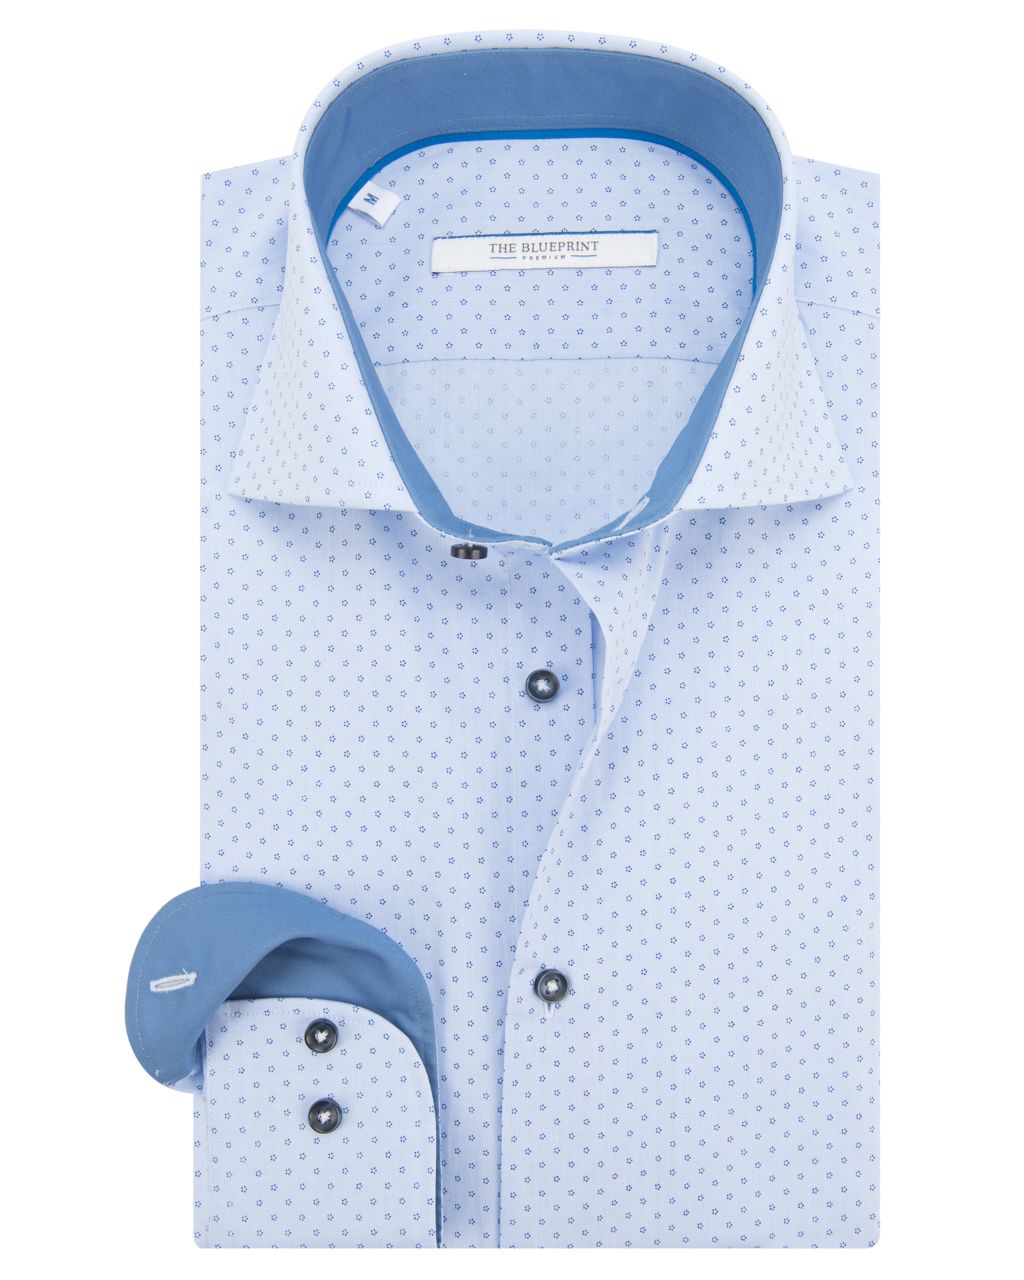 The BLUEPRINT Premium Trendy overhemd LM Donkerblauw print 061747-001-L